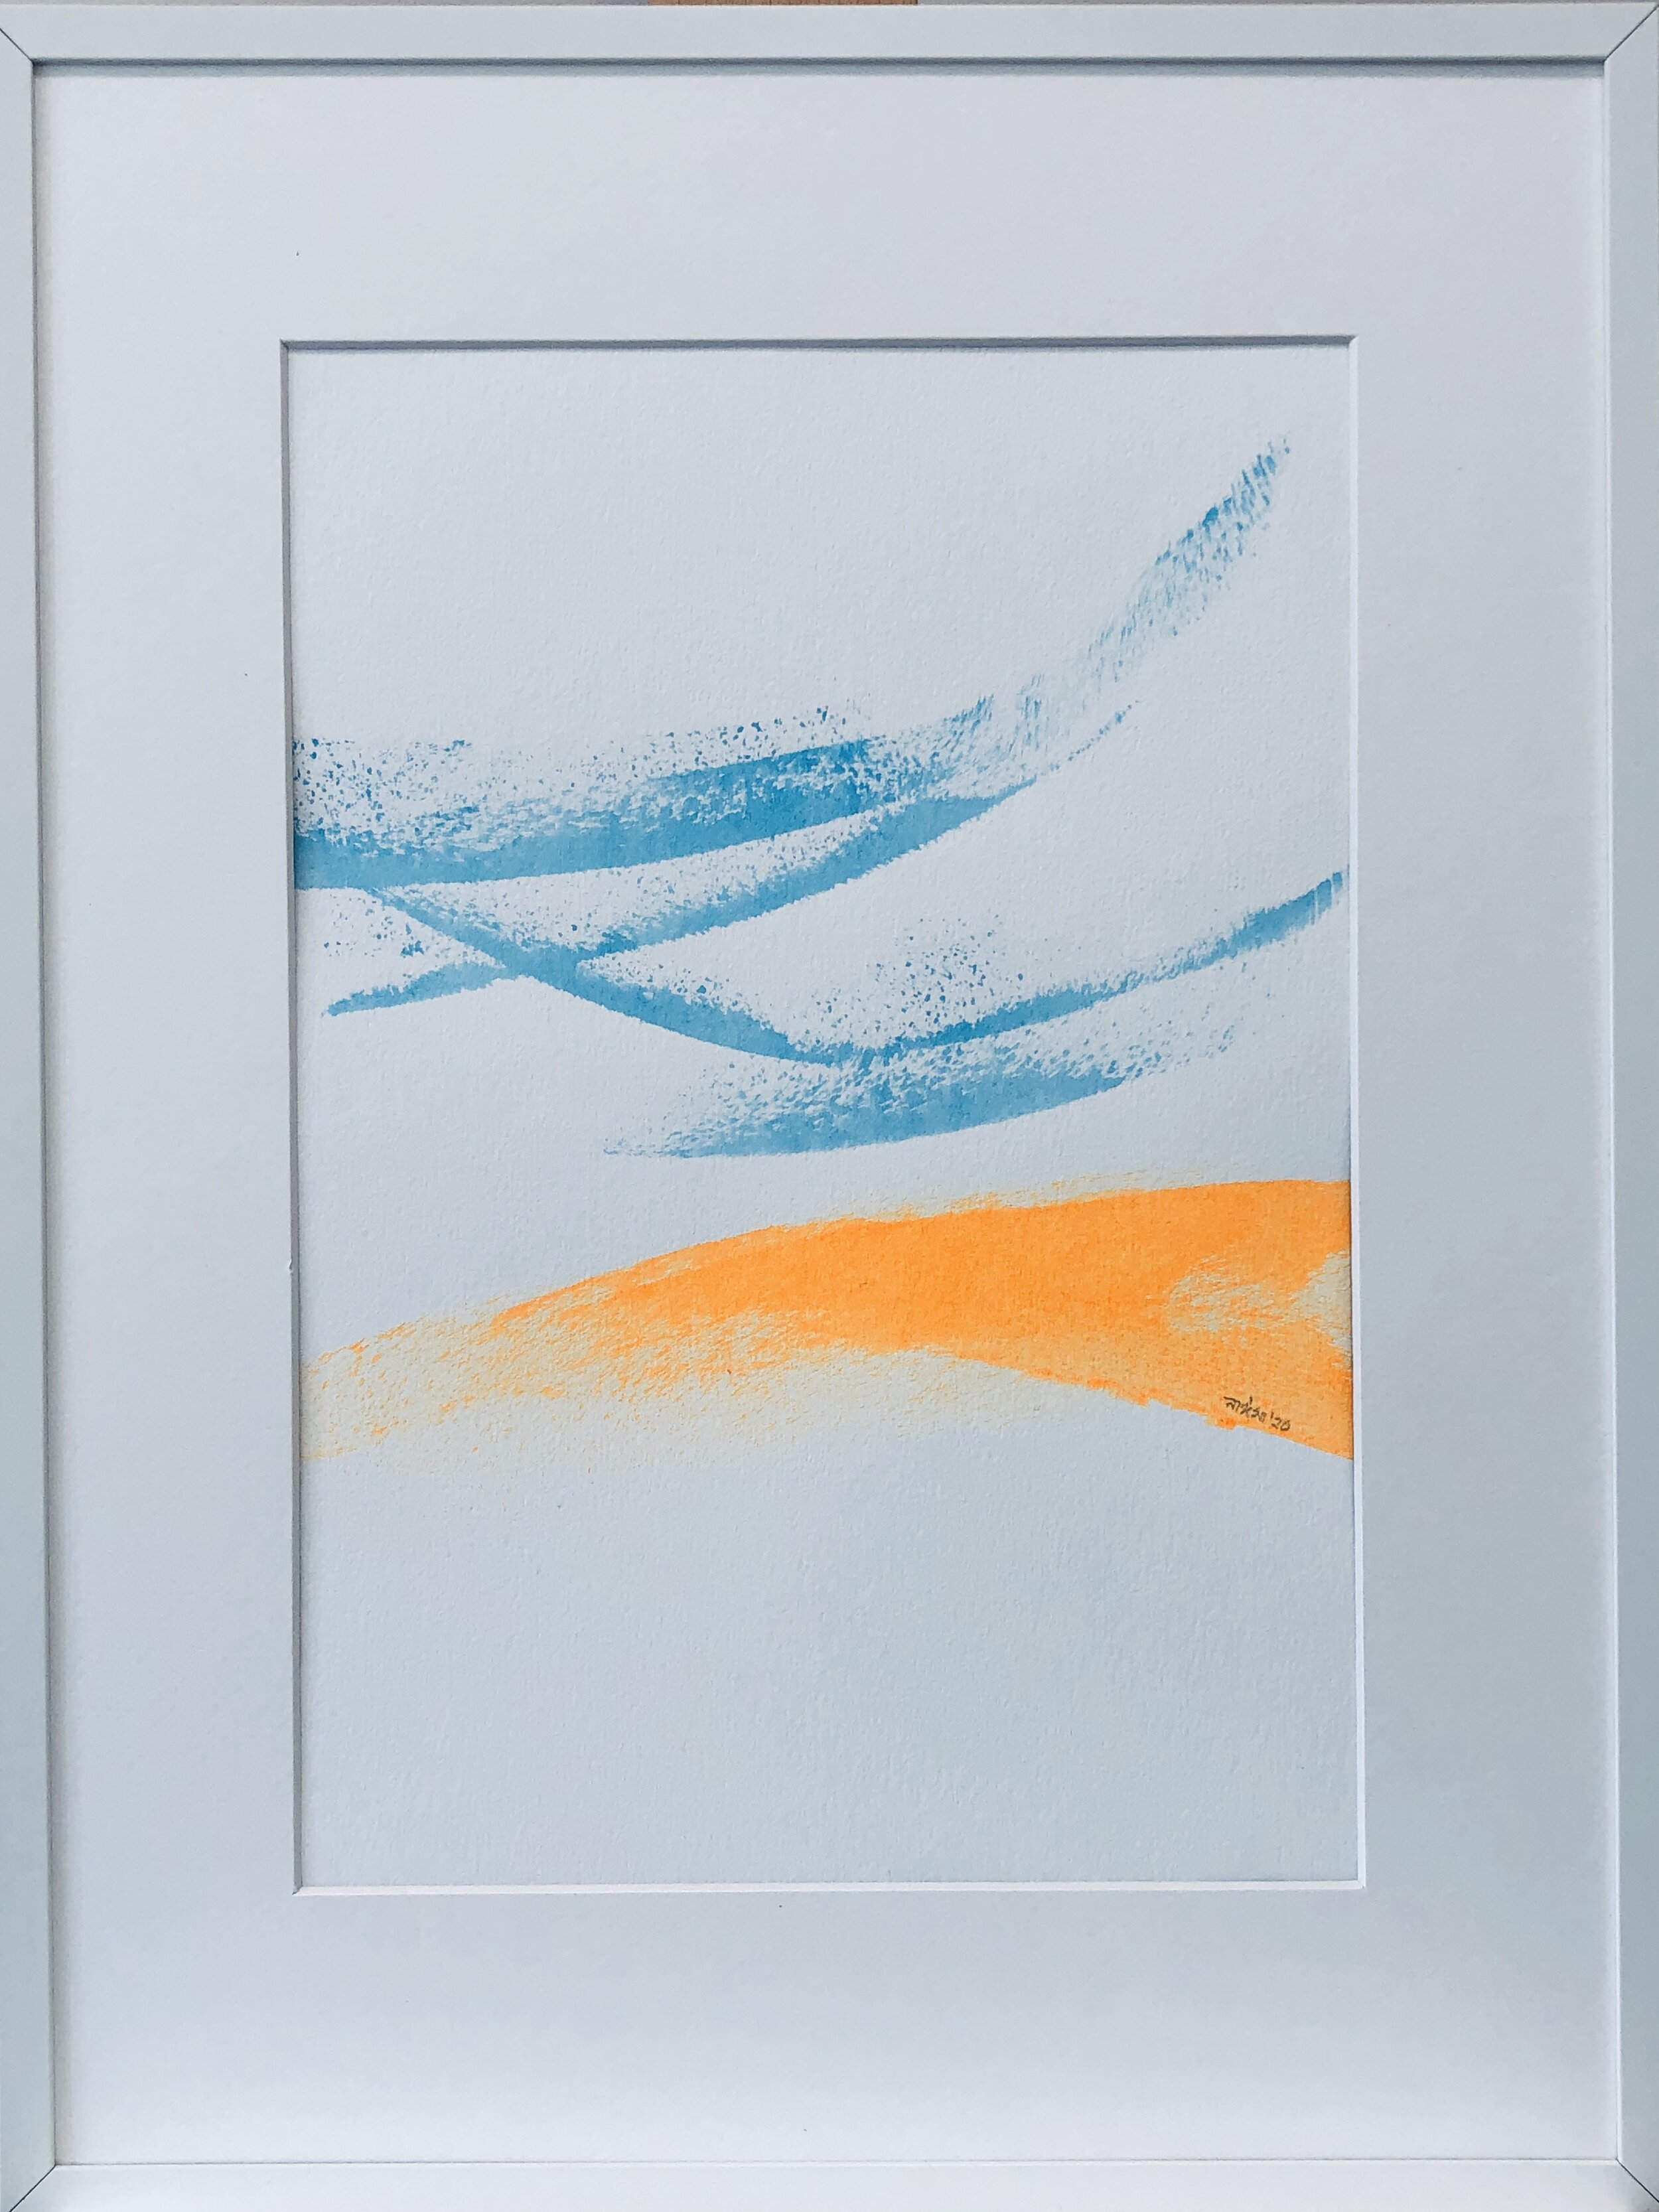  Desert sky 19  Watercolor on paper  30x40cm 